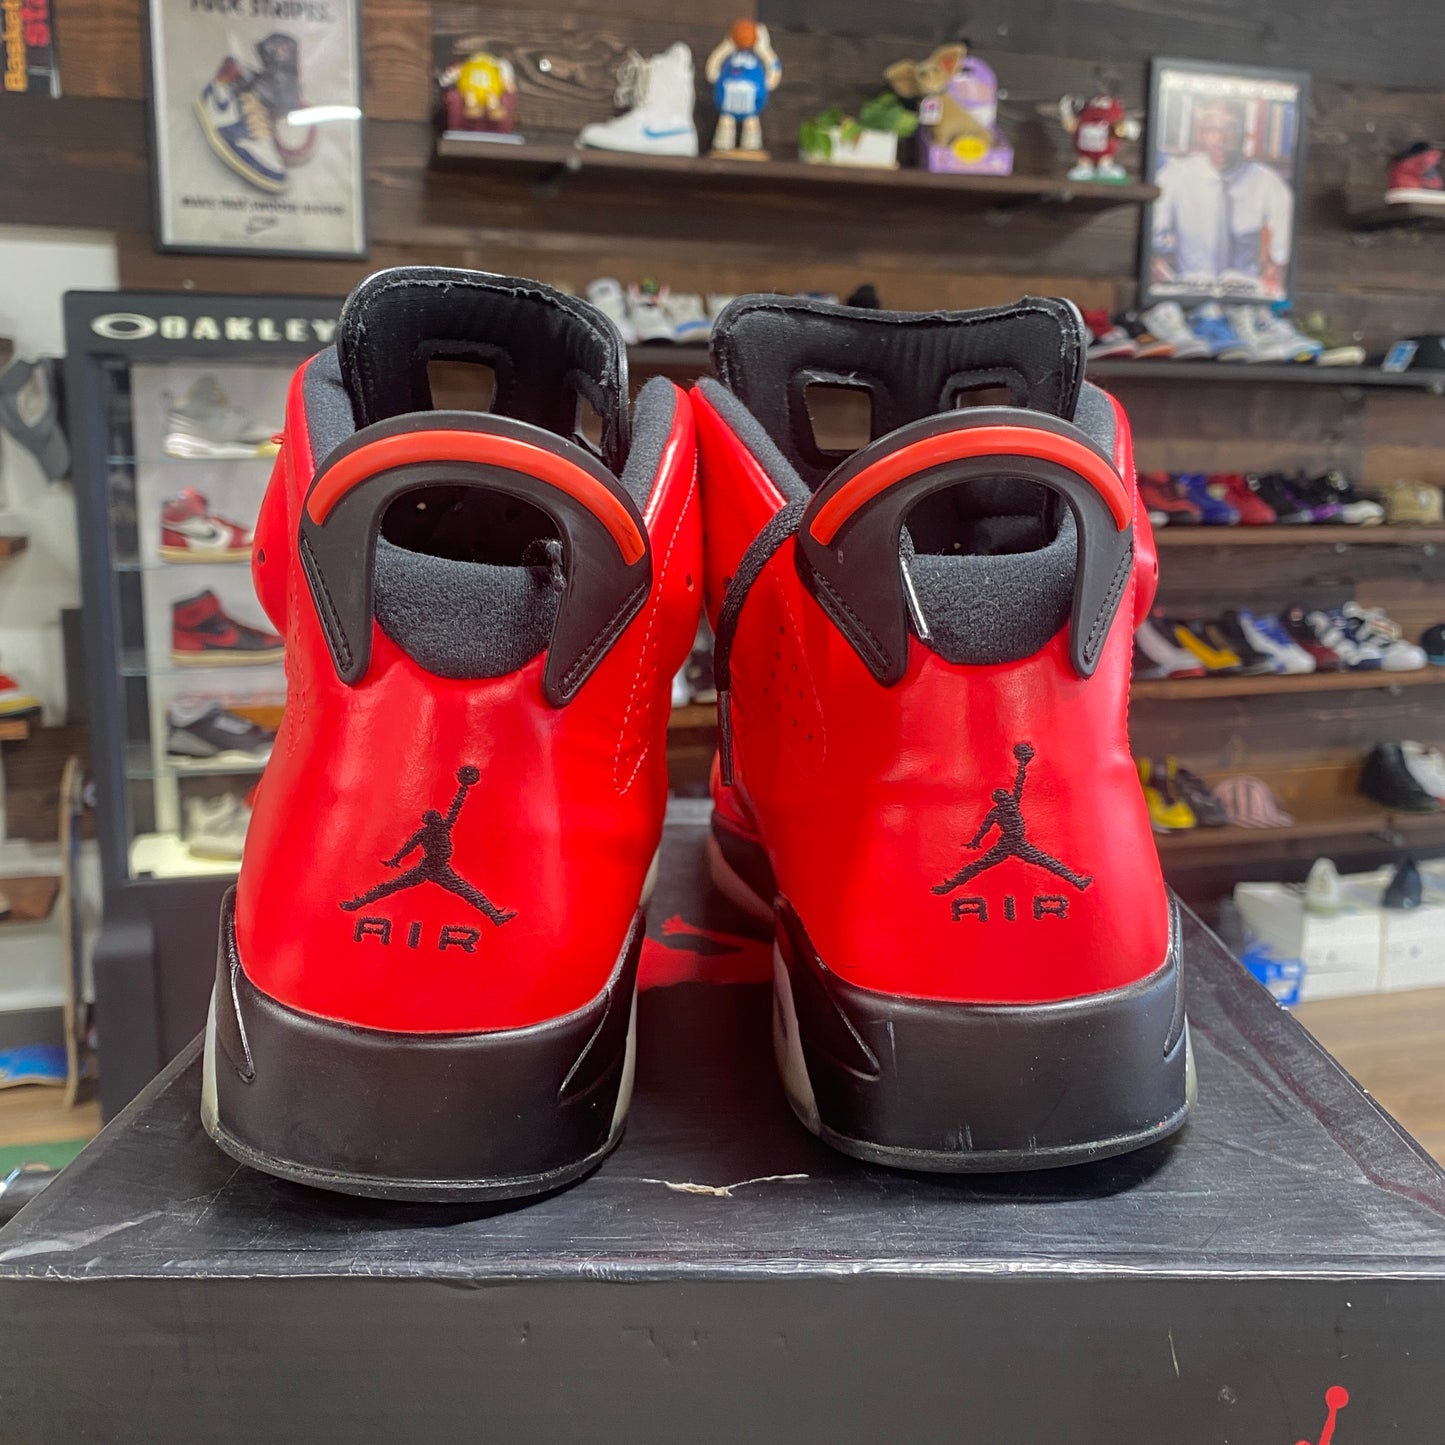 Jordan 6 'Infrared 23' Size 11.5